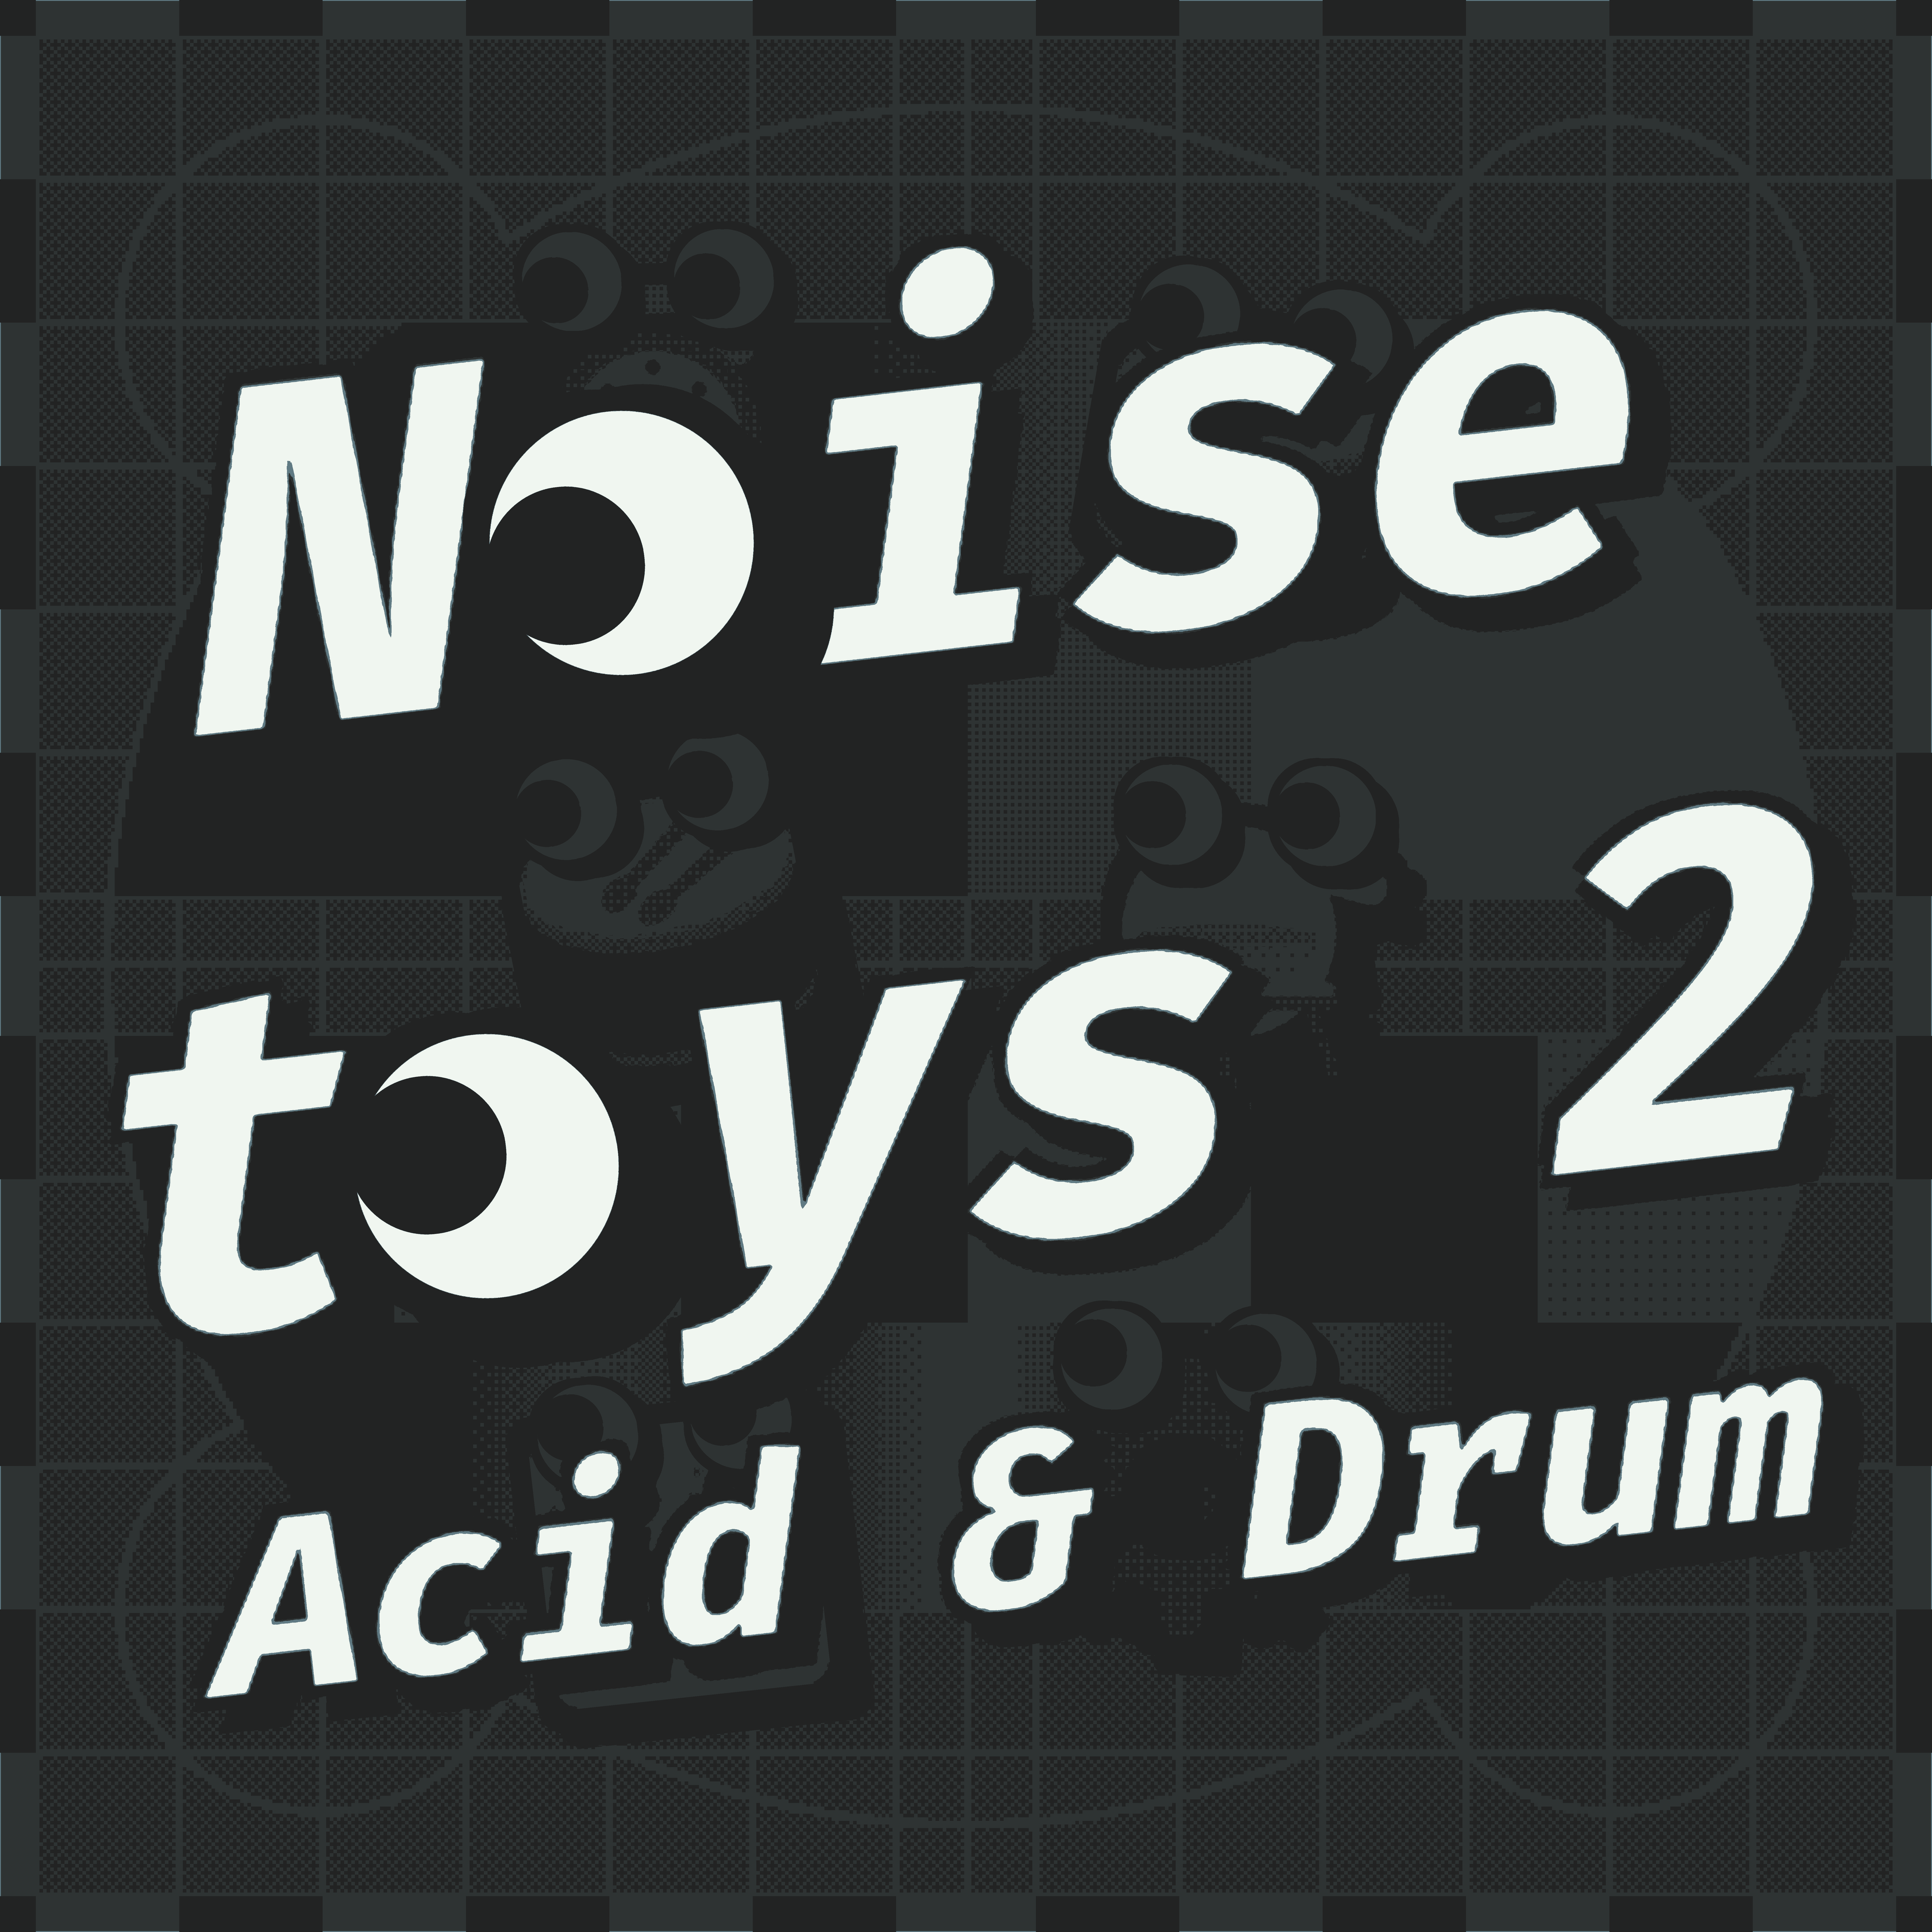 Noisetoys 2 - Acid & Drum